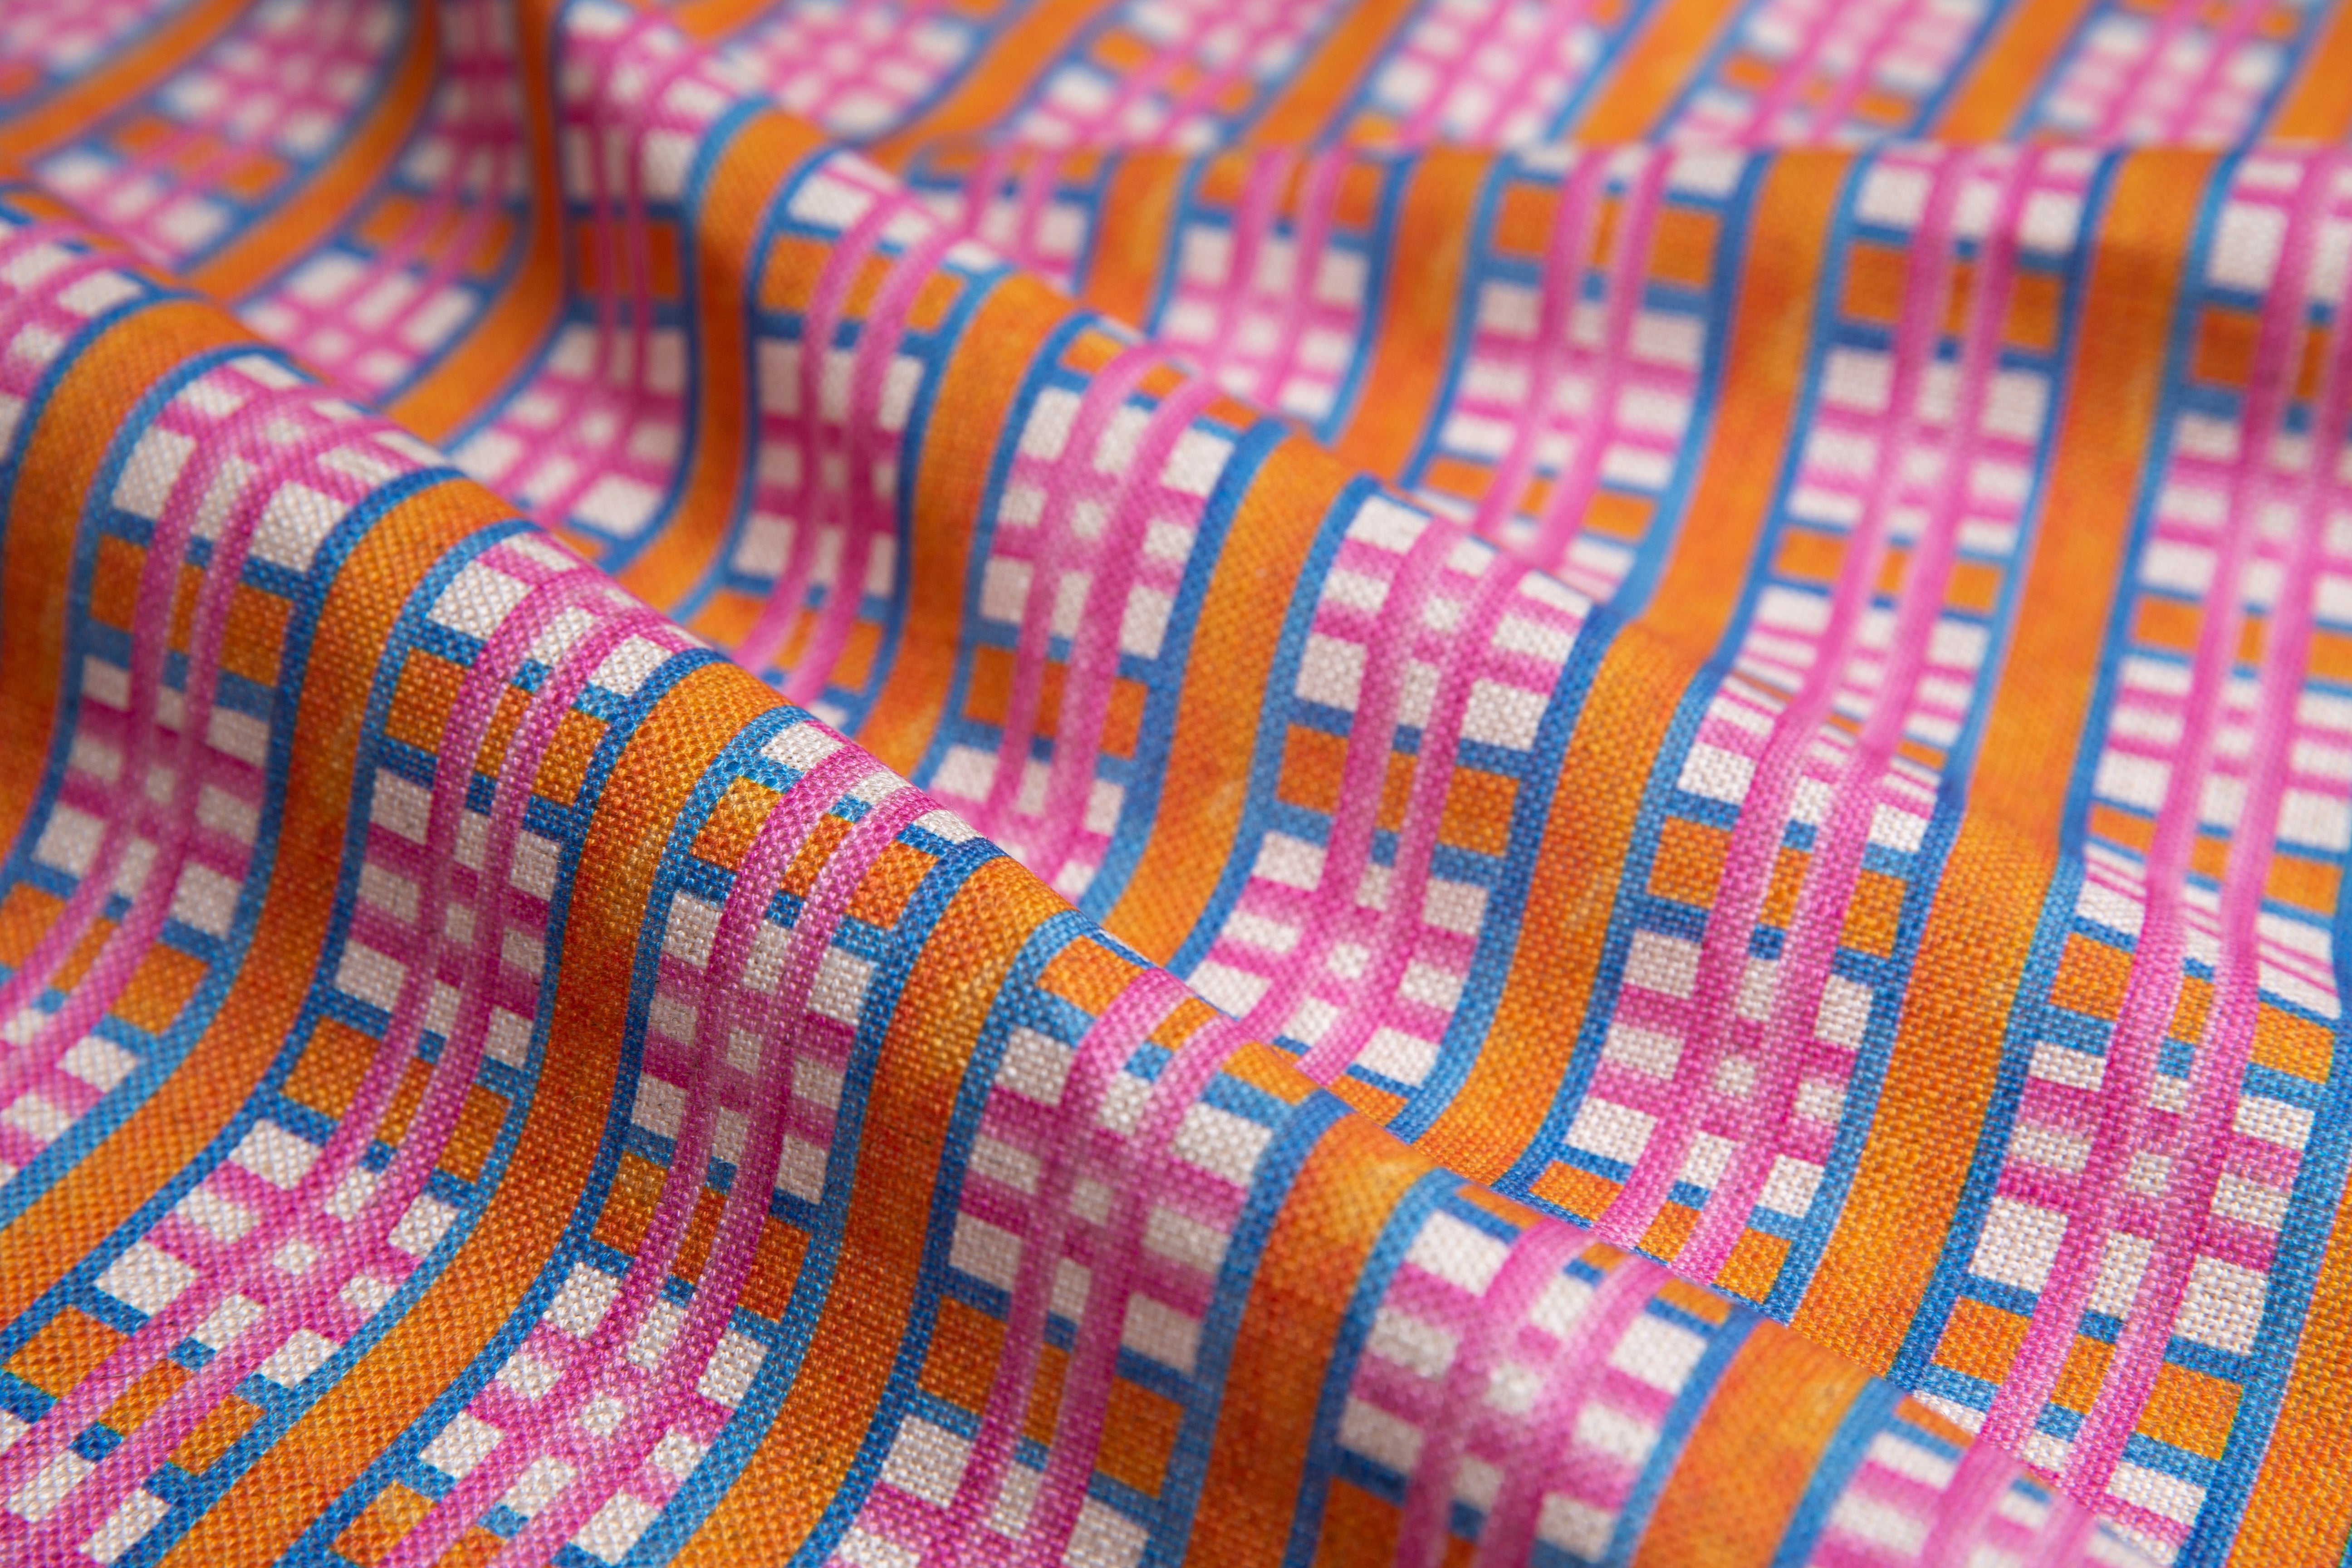 Bethie Tricks Textiles